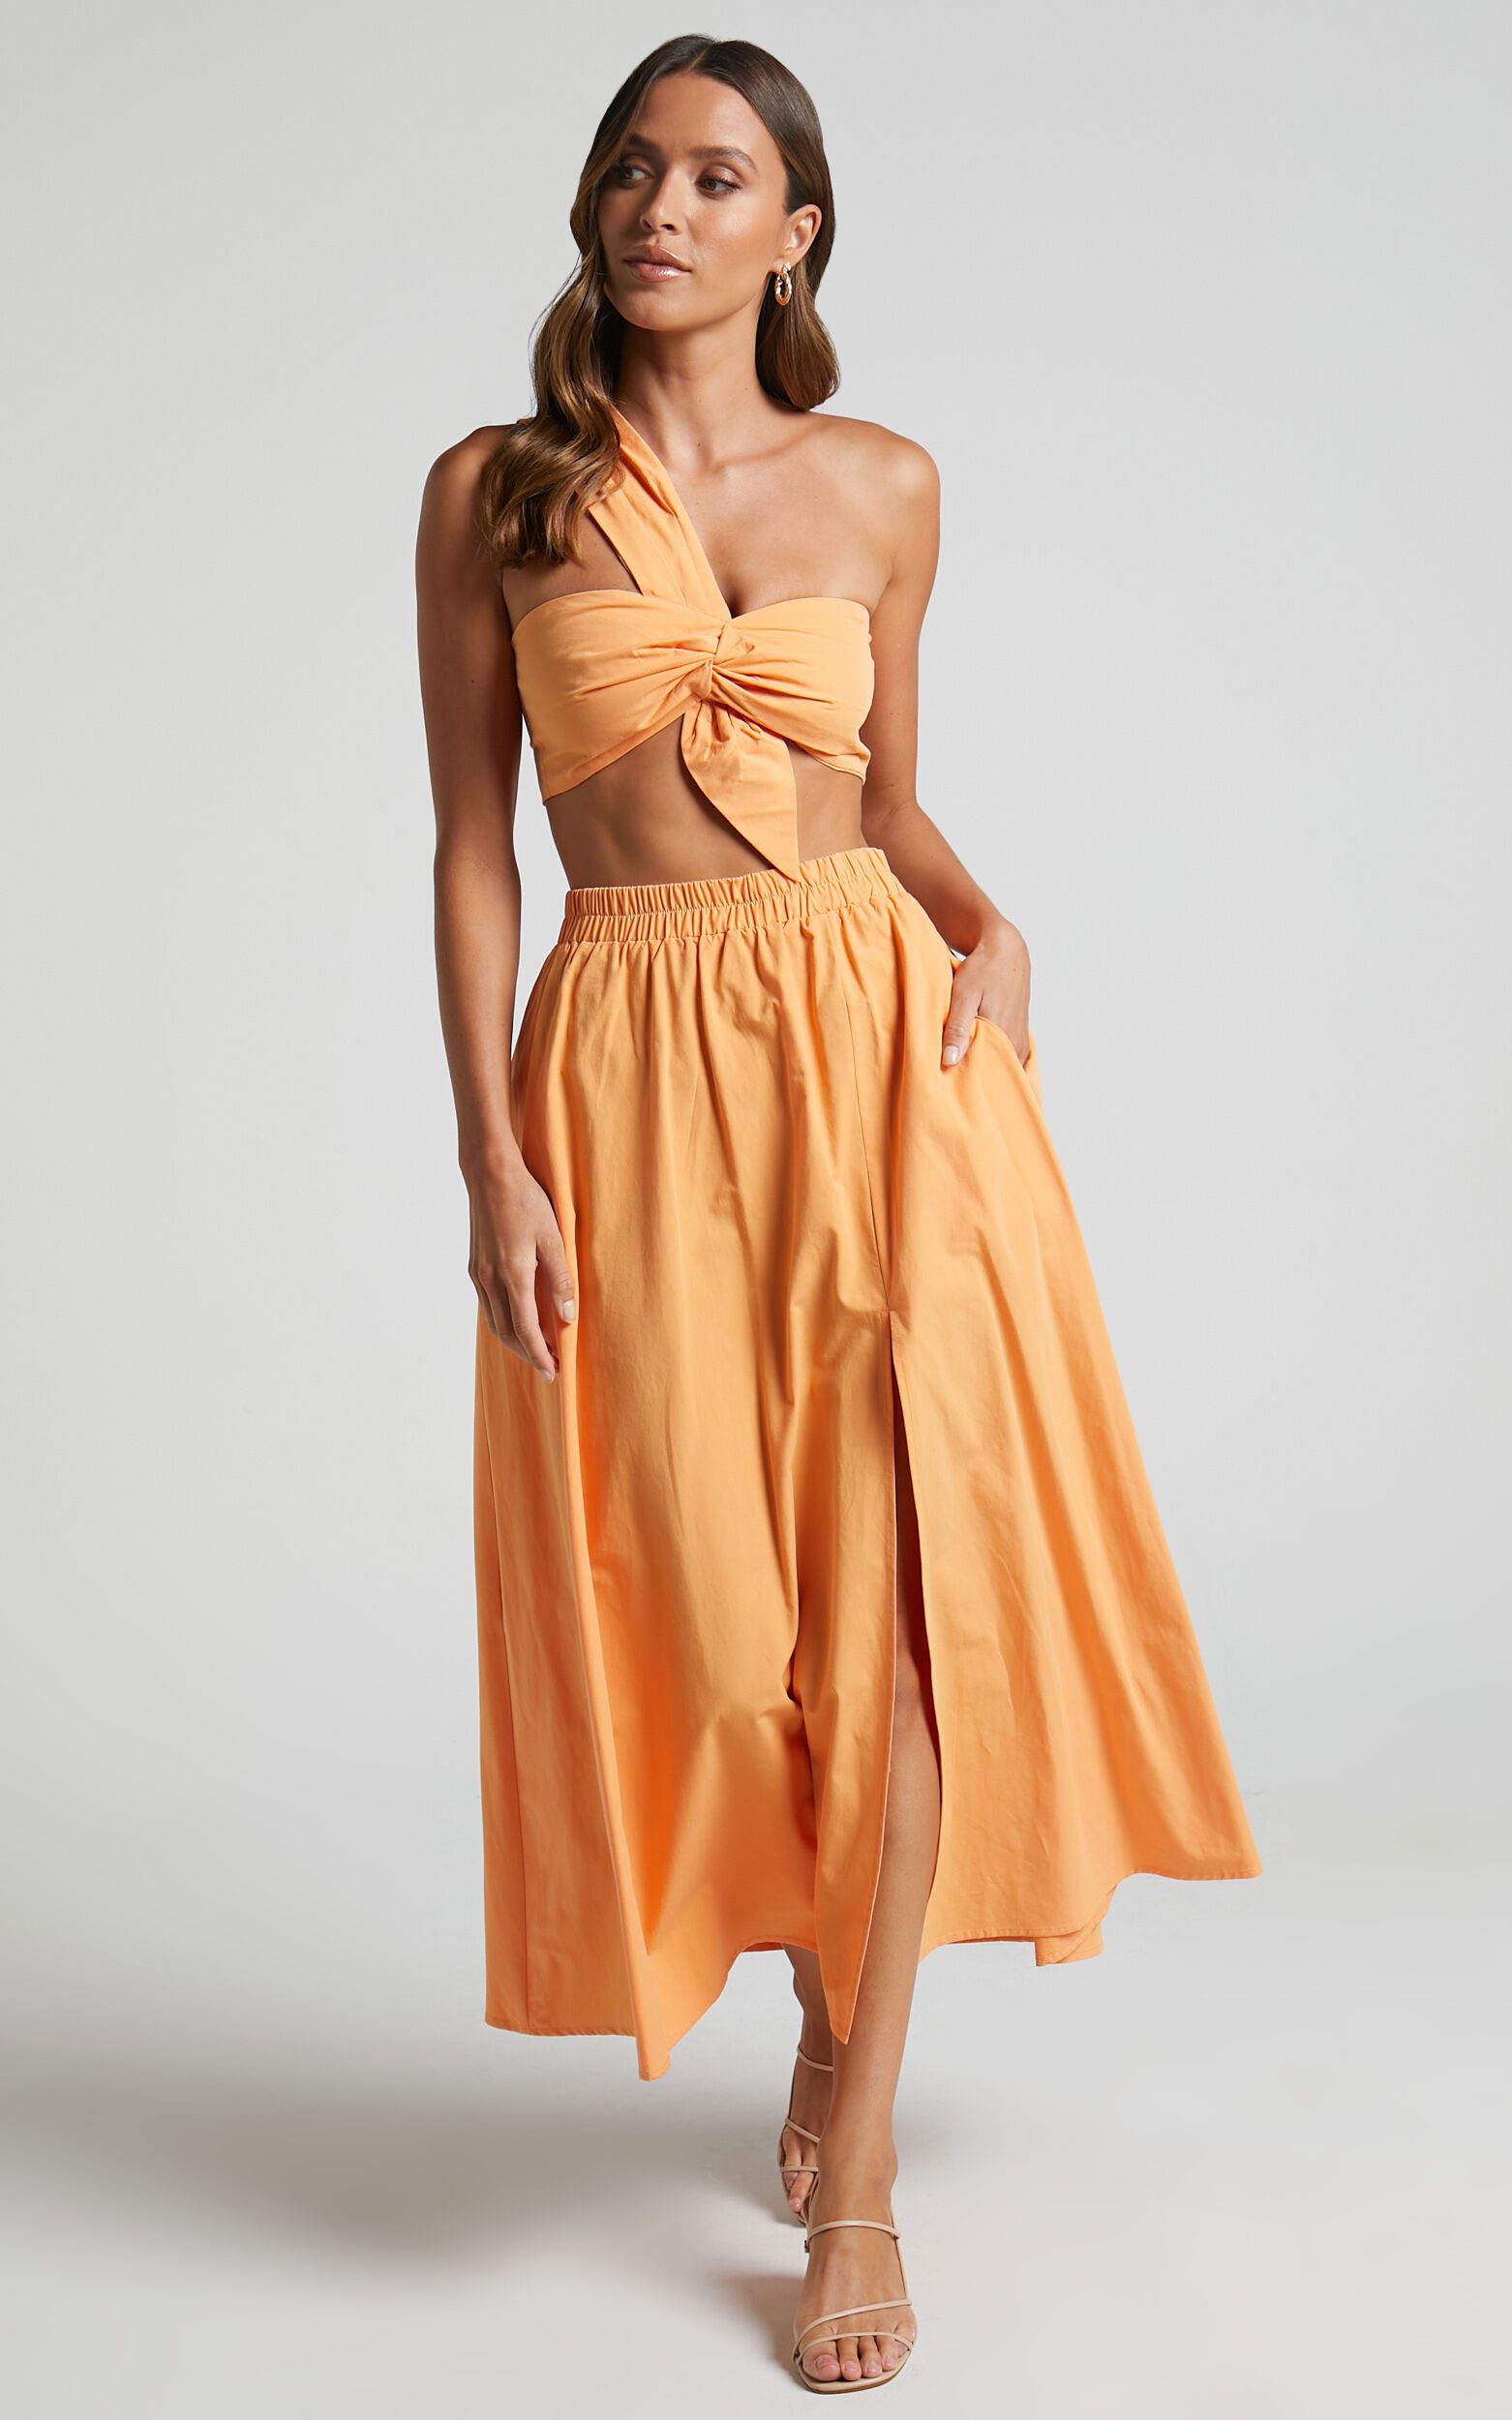 Sula Two Piece Set - One Shoulder Bralette Crop Top and Midi Skirt in Sherbet Orange | Showpo (US, UK & Europe)